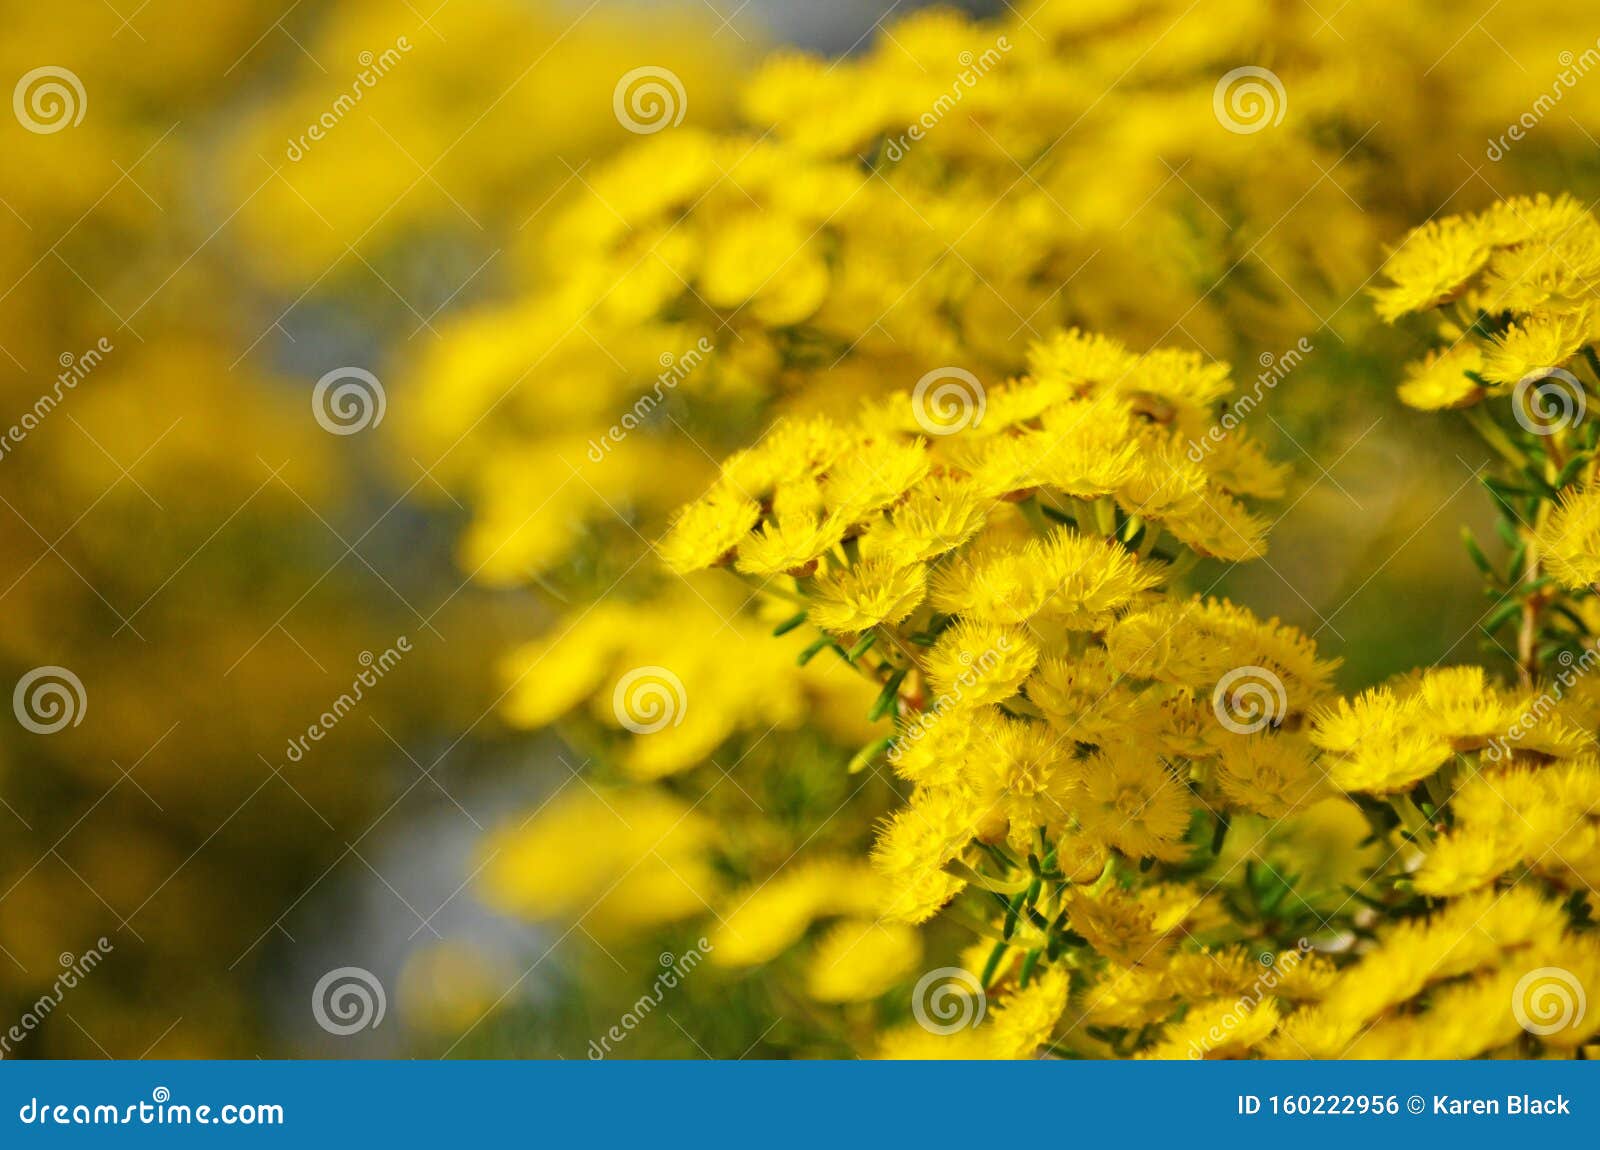 Australian Native Yellow Feather Chrysantha Stock Photo Image background, space: 160222956